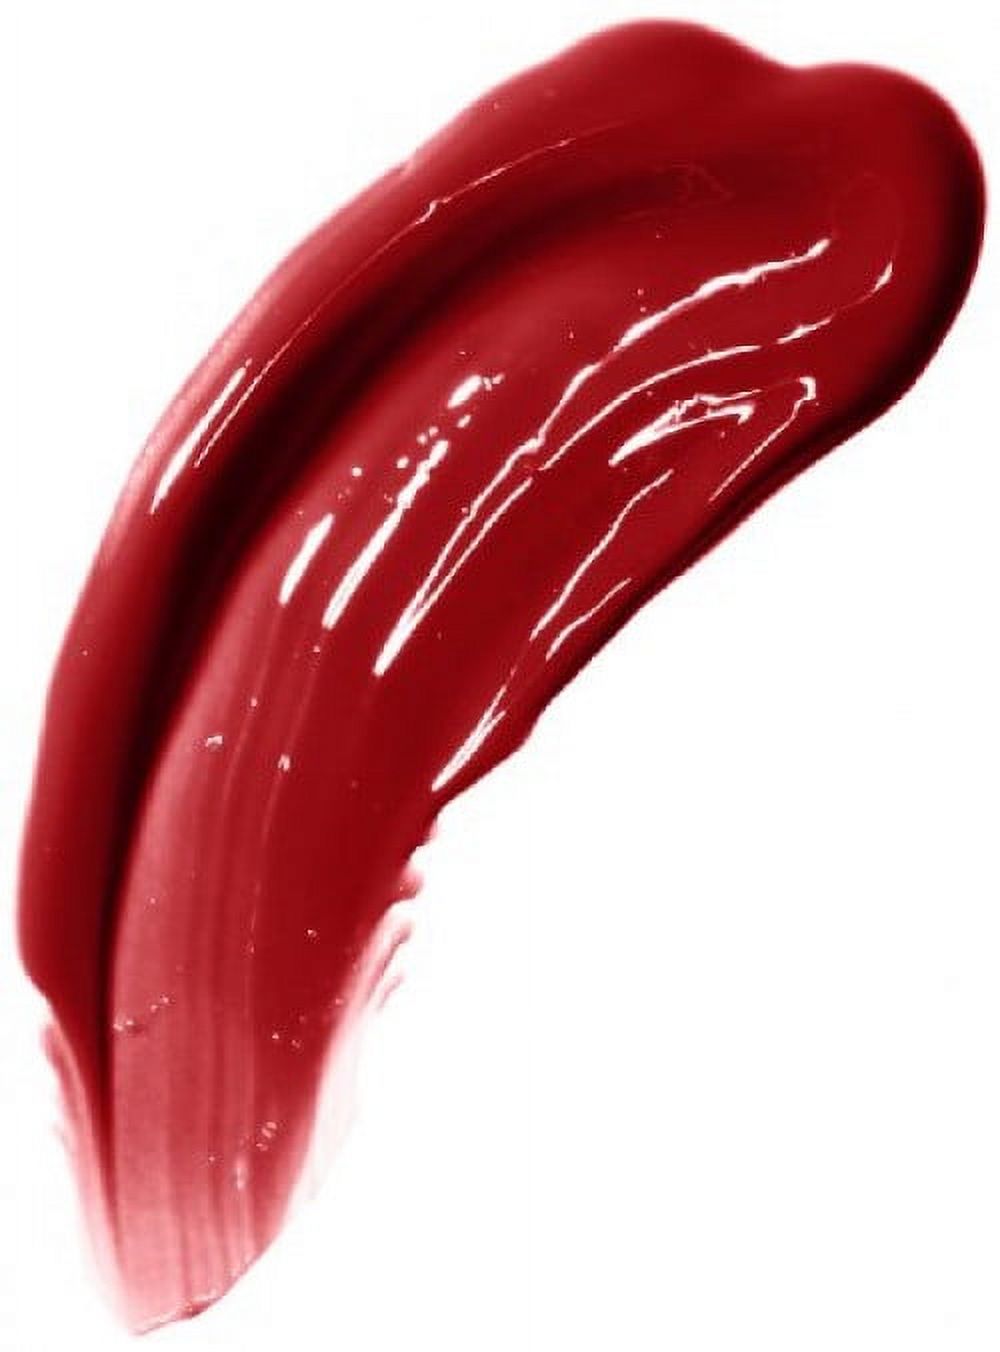 L'oreal Infallible Never Fail Lipcolour, Crimson - image 2 of 4